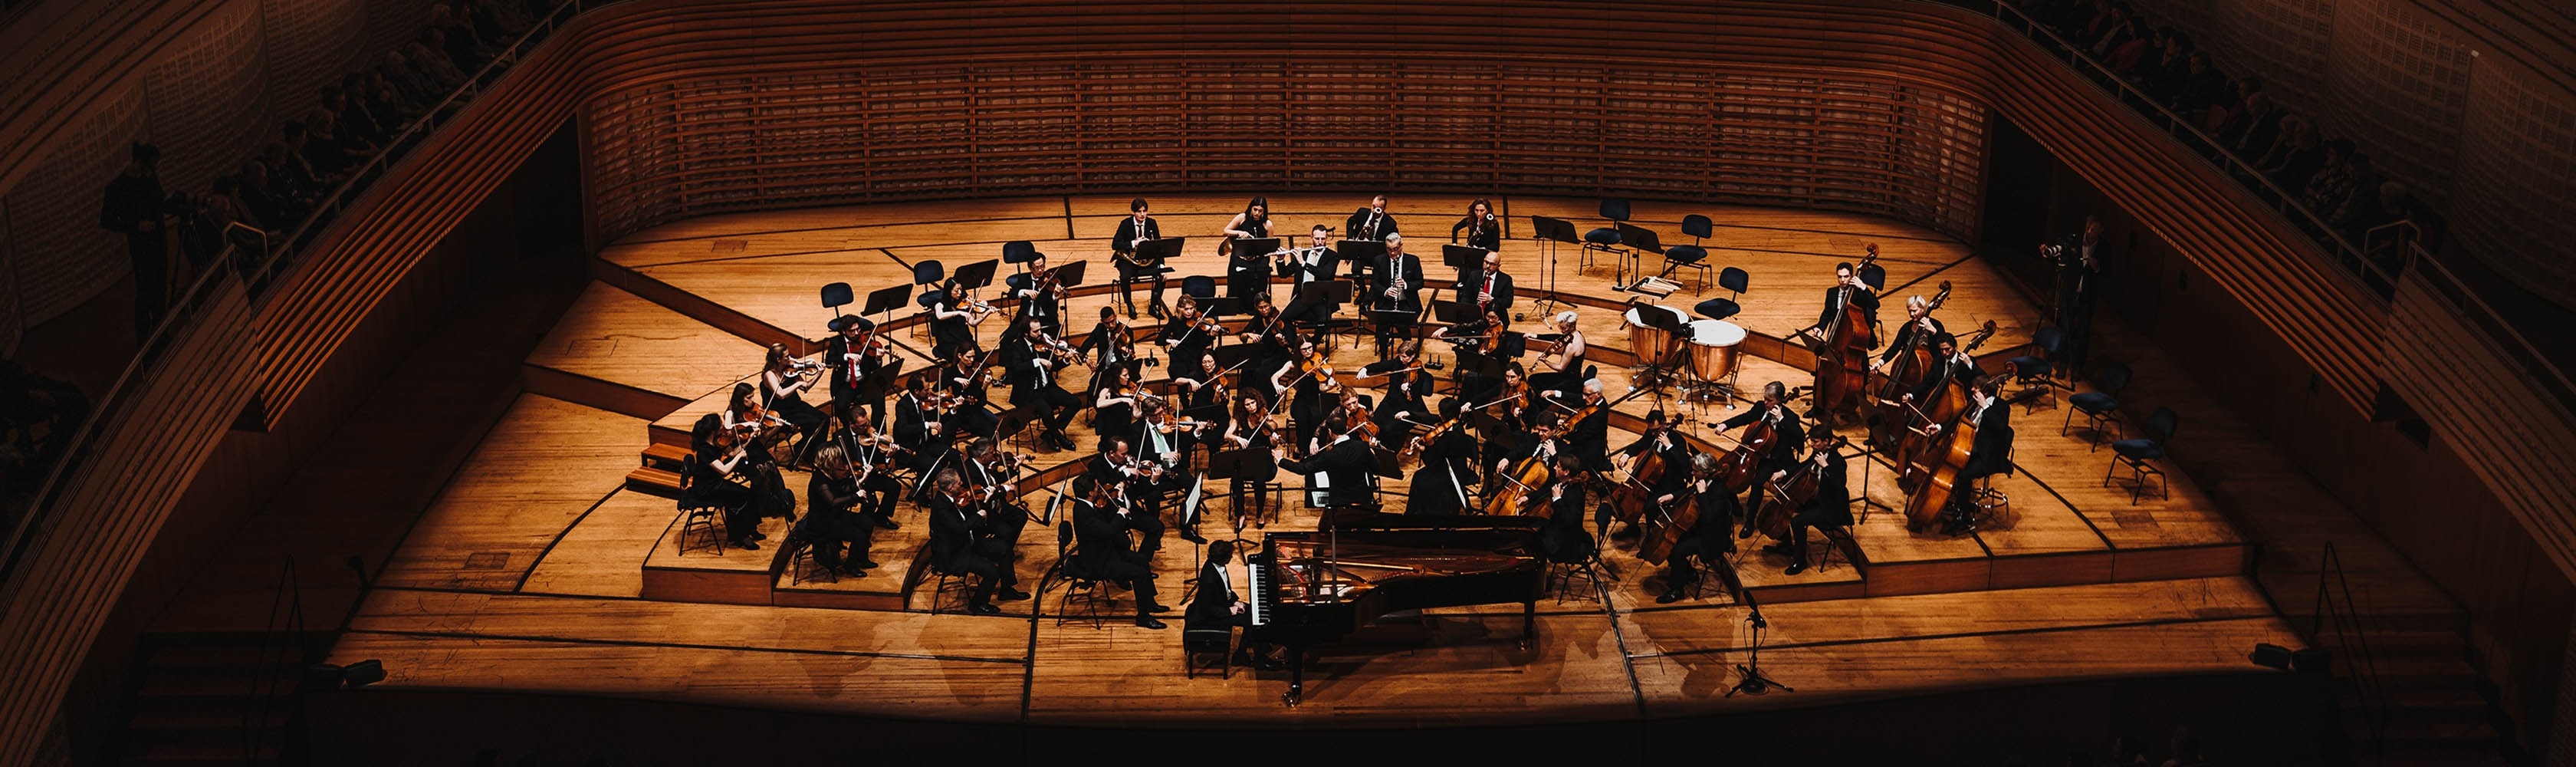 Human Rights Orchestra  – La nona sinfonia di Beethoven